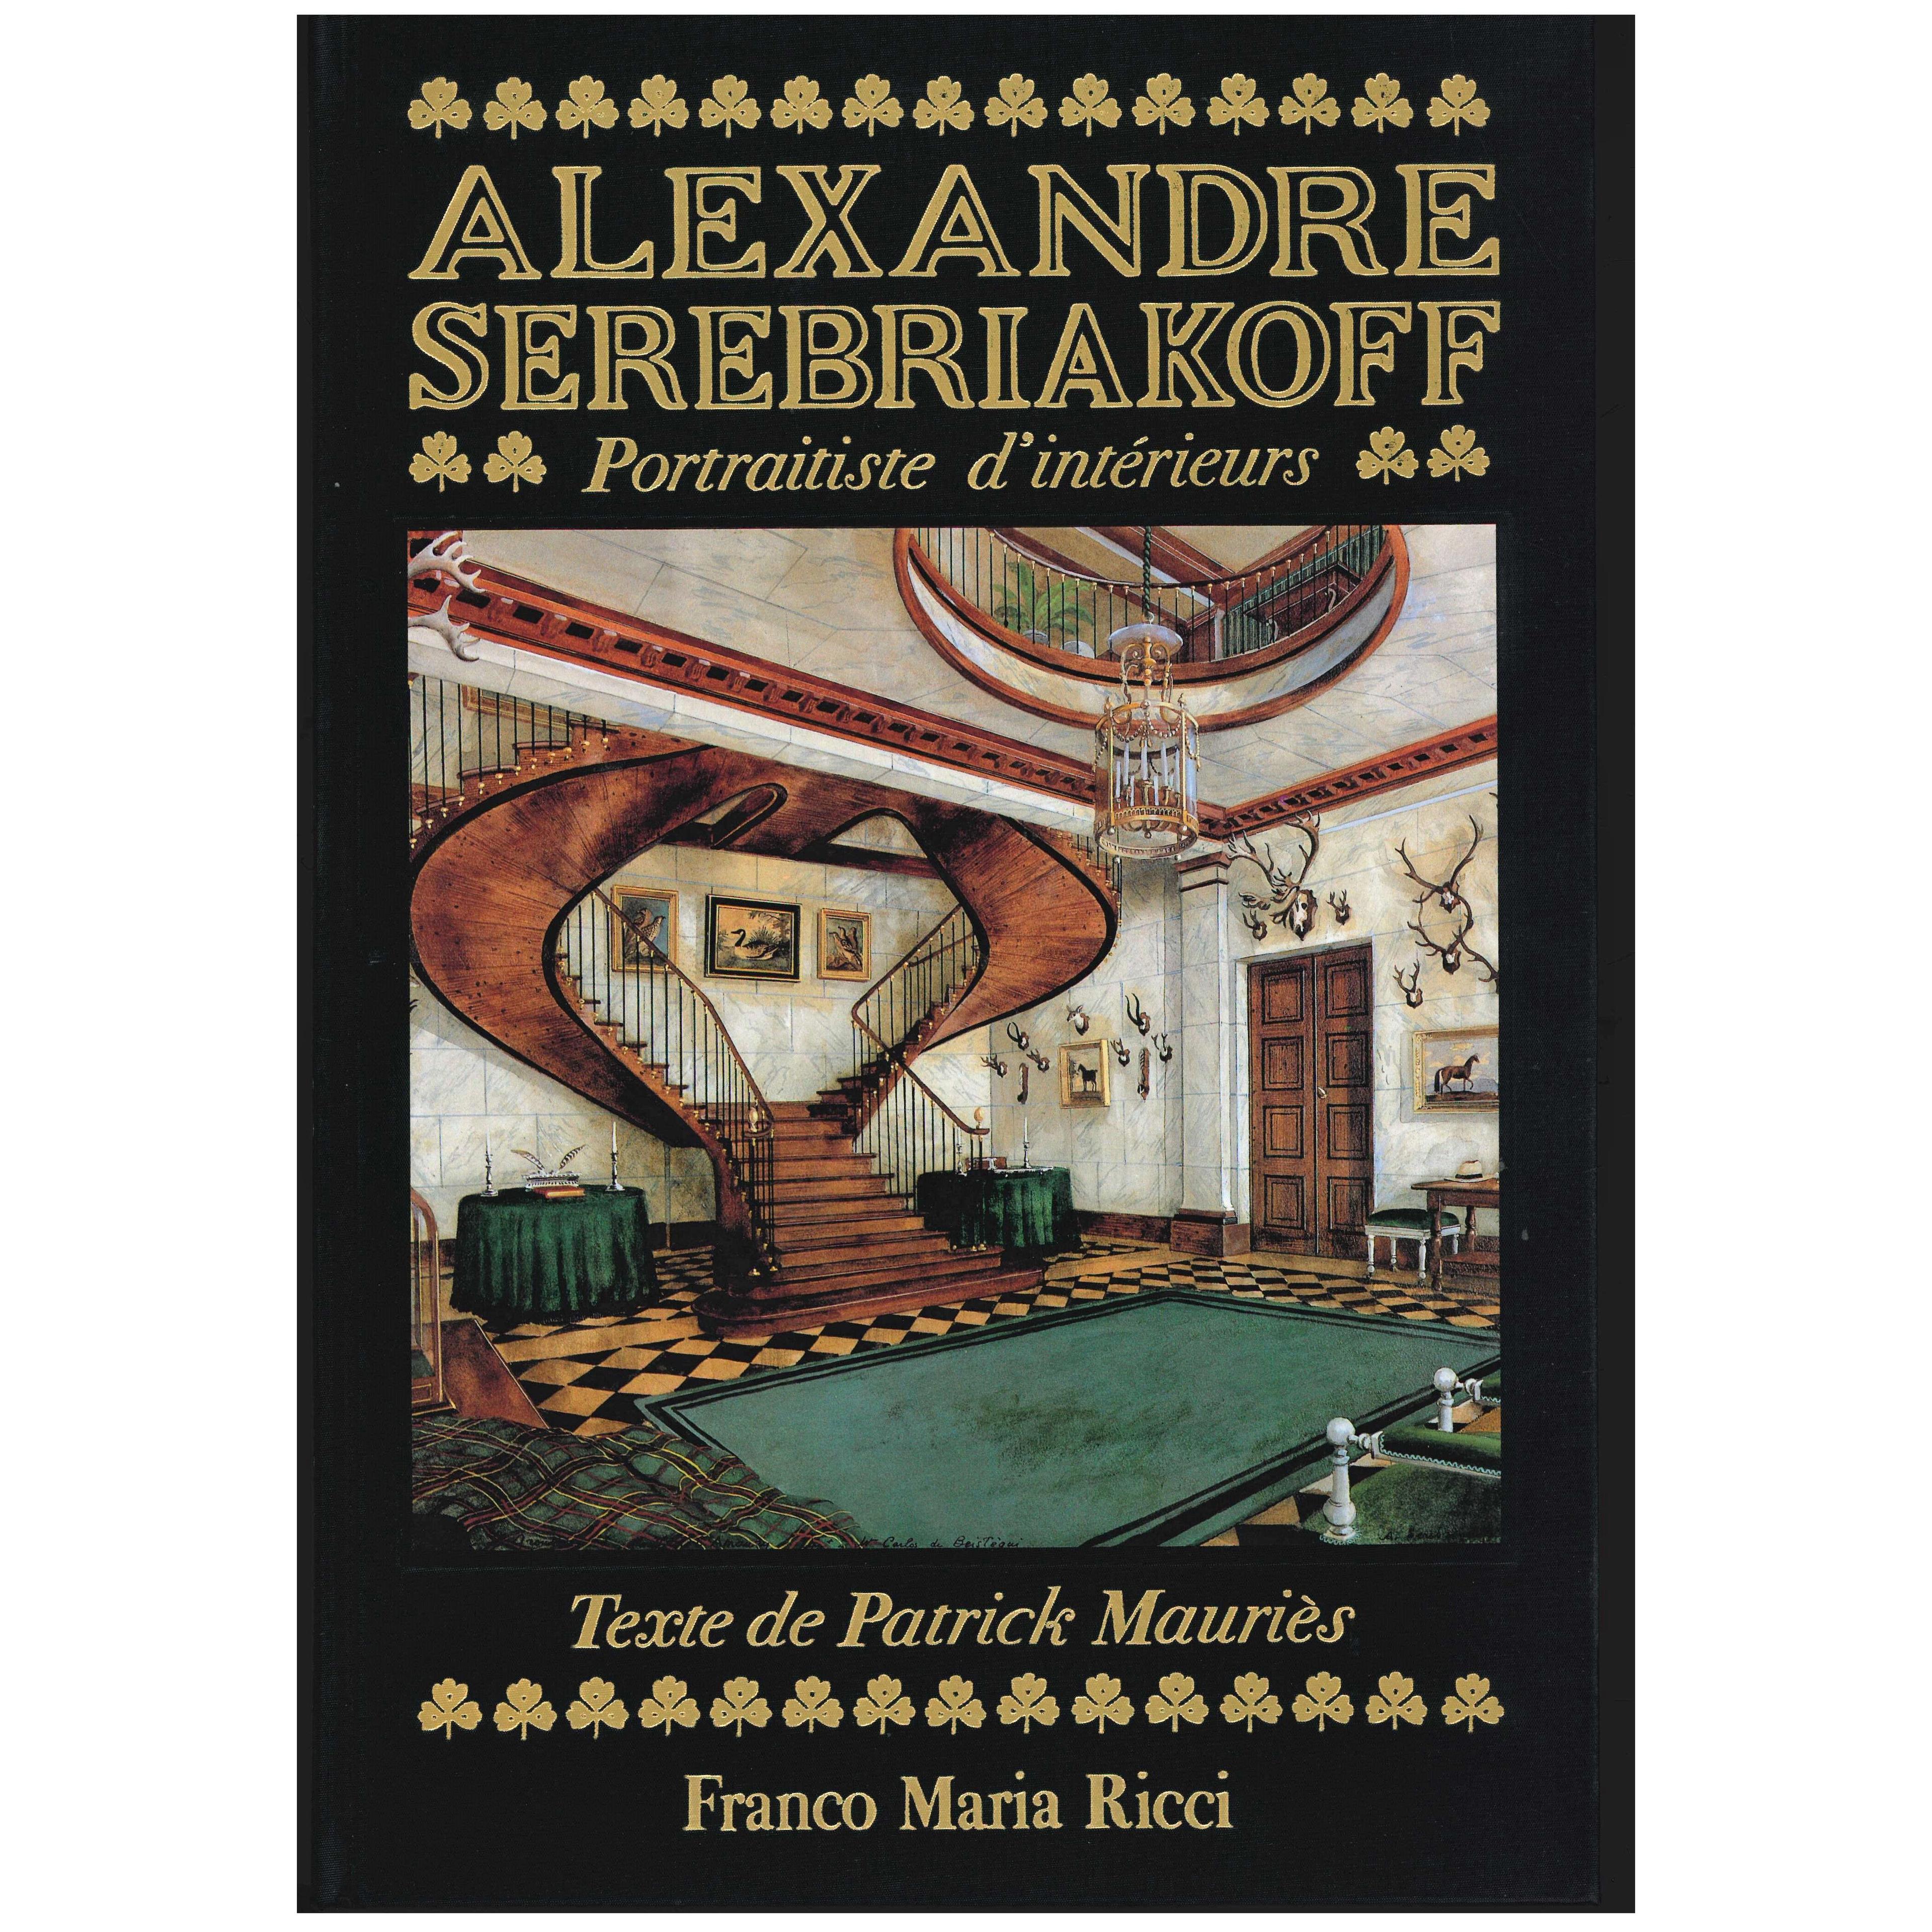 ALEXANDRE SEREBRIAKOFF - Portraitiste d'interieurs (book)